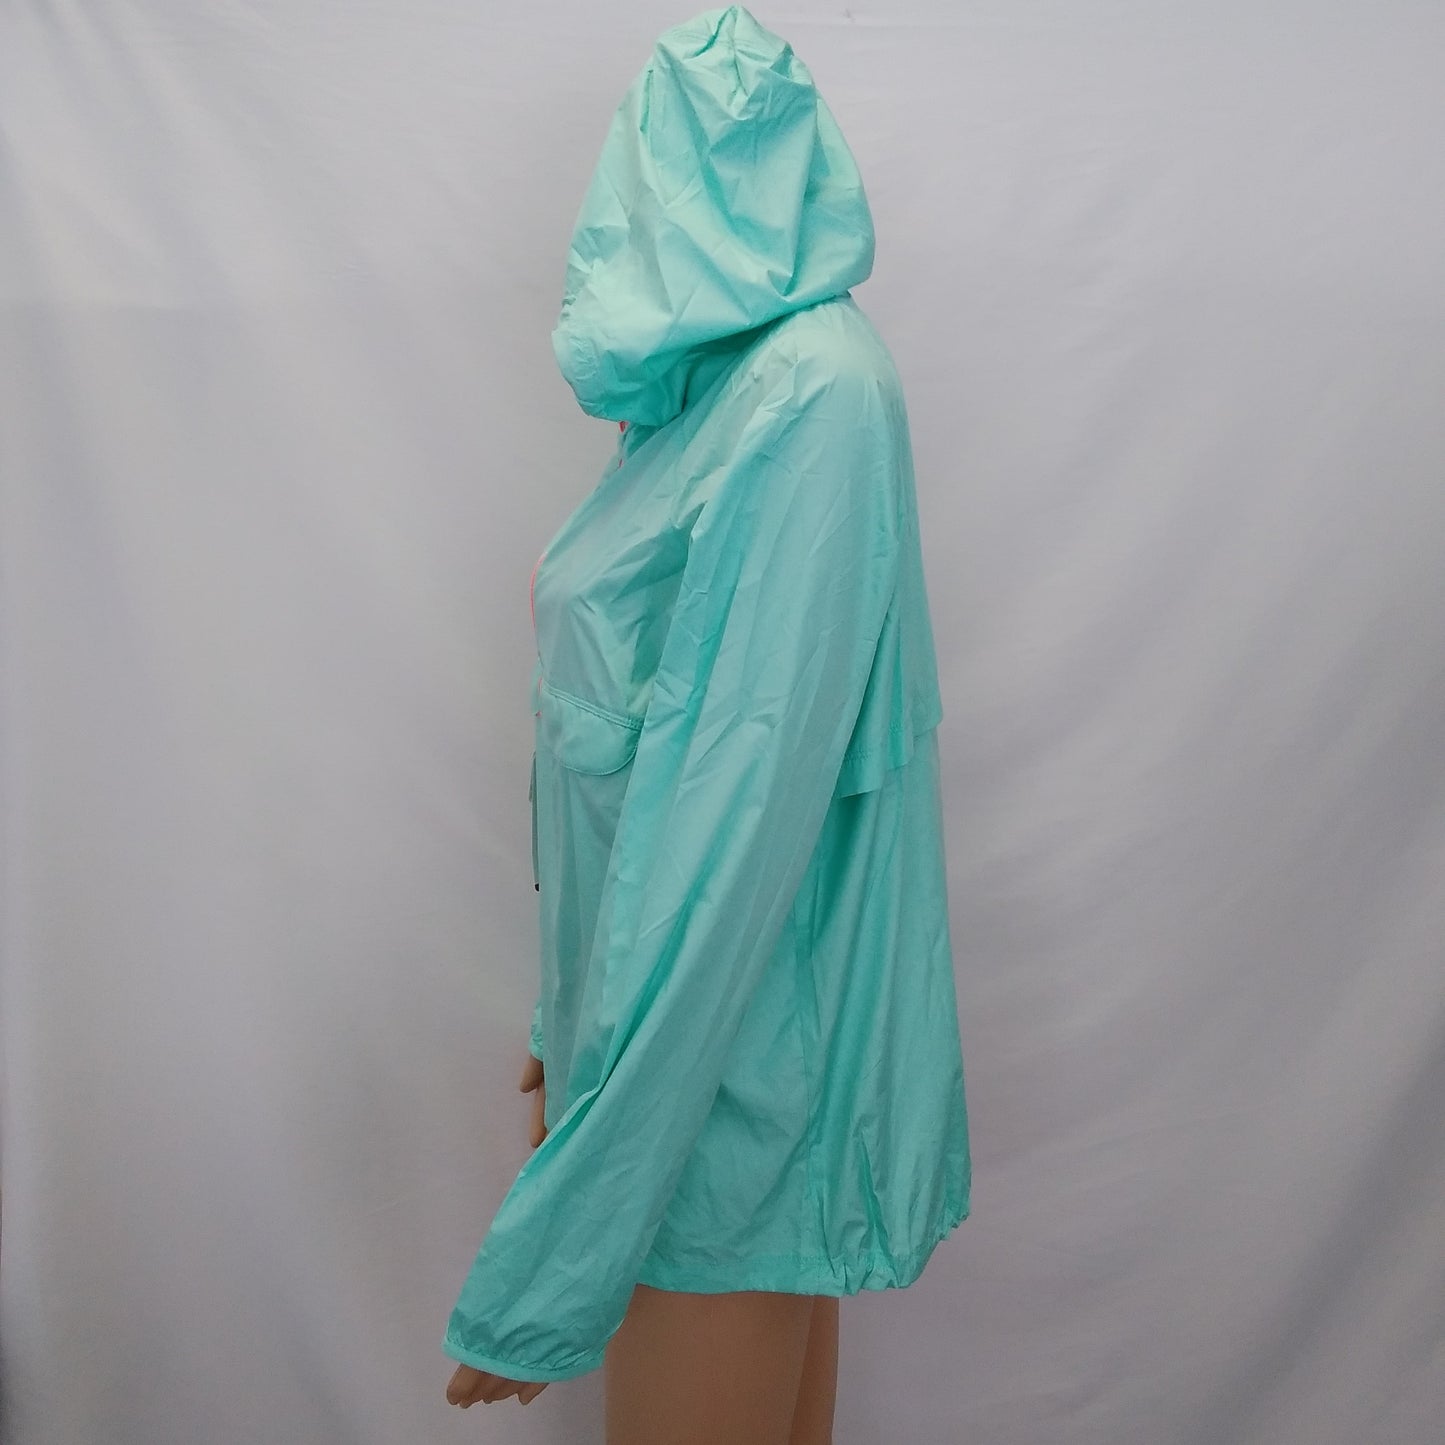 NWT - Under Armour Women's Seafoam Green Hooded Rain Jacket - Size: SM/P